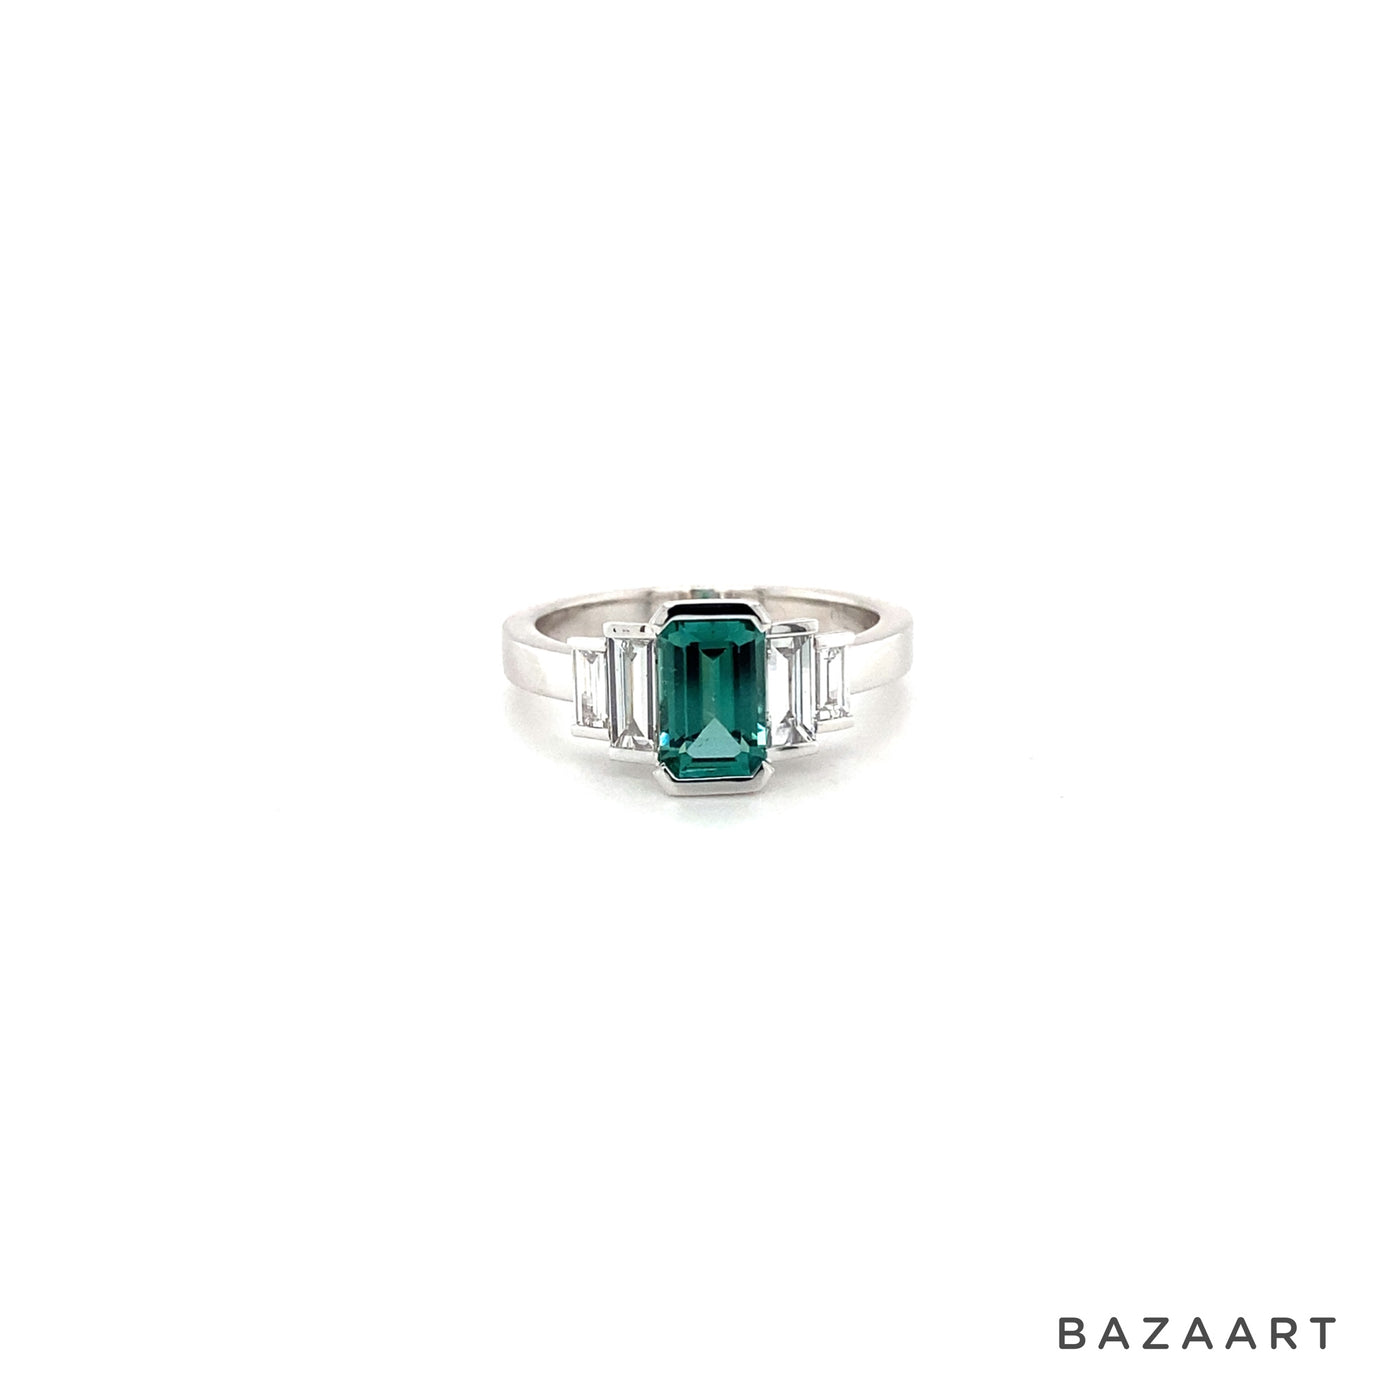 9ct white gold, emerald cut blue green tourmaline bar set with graduating baguette shoulder diamonds.